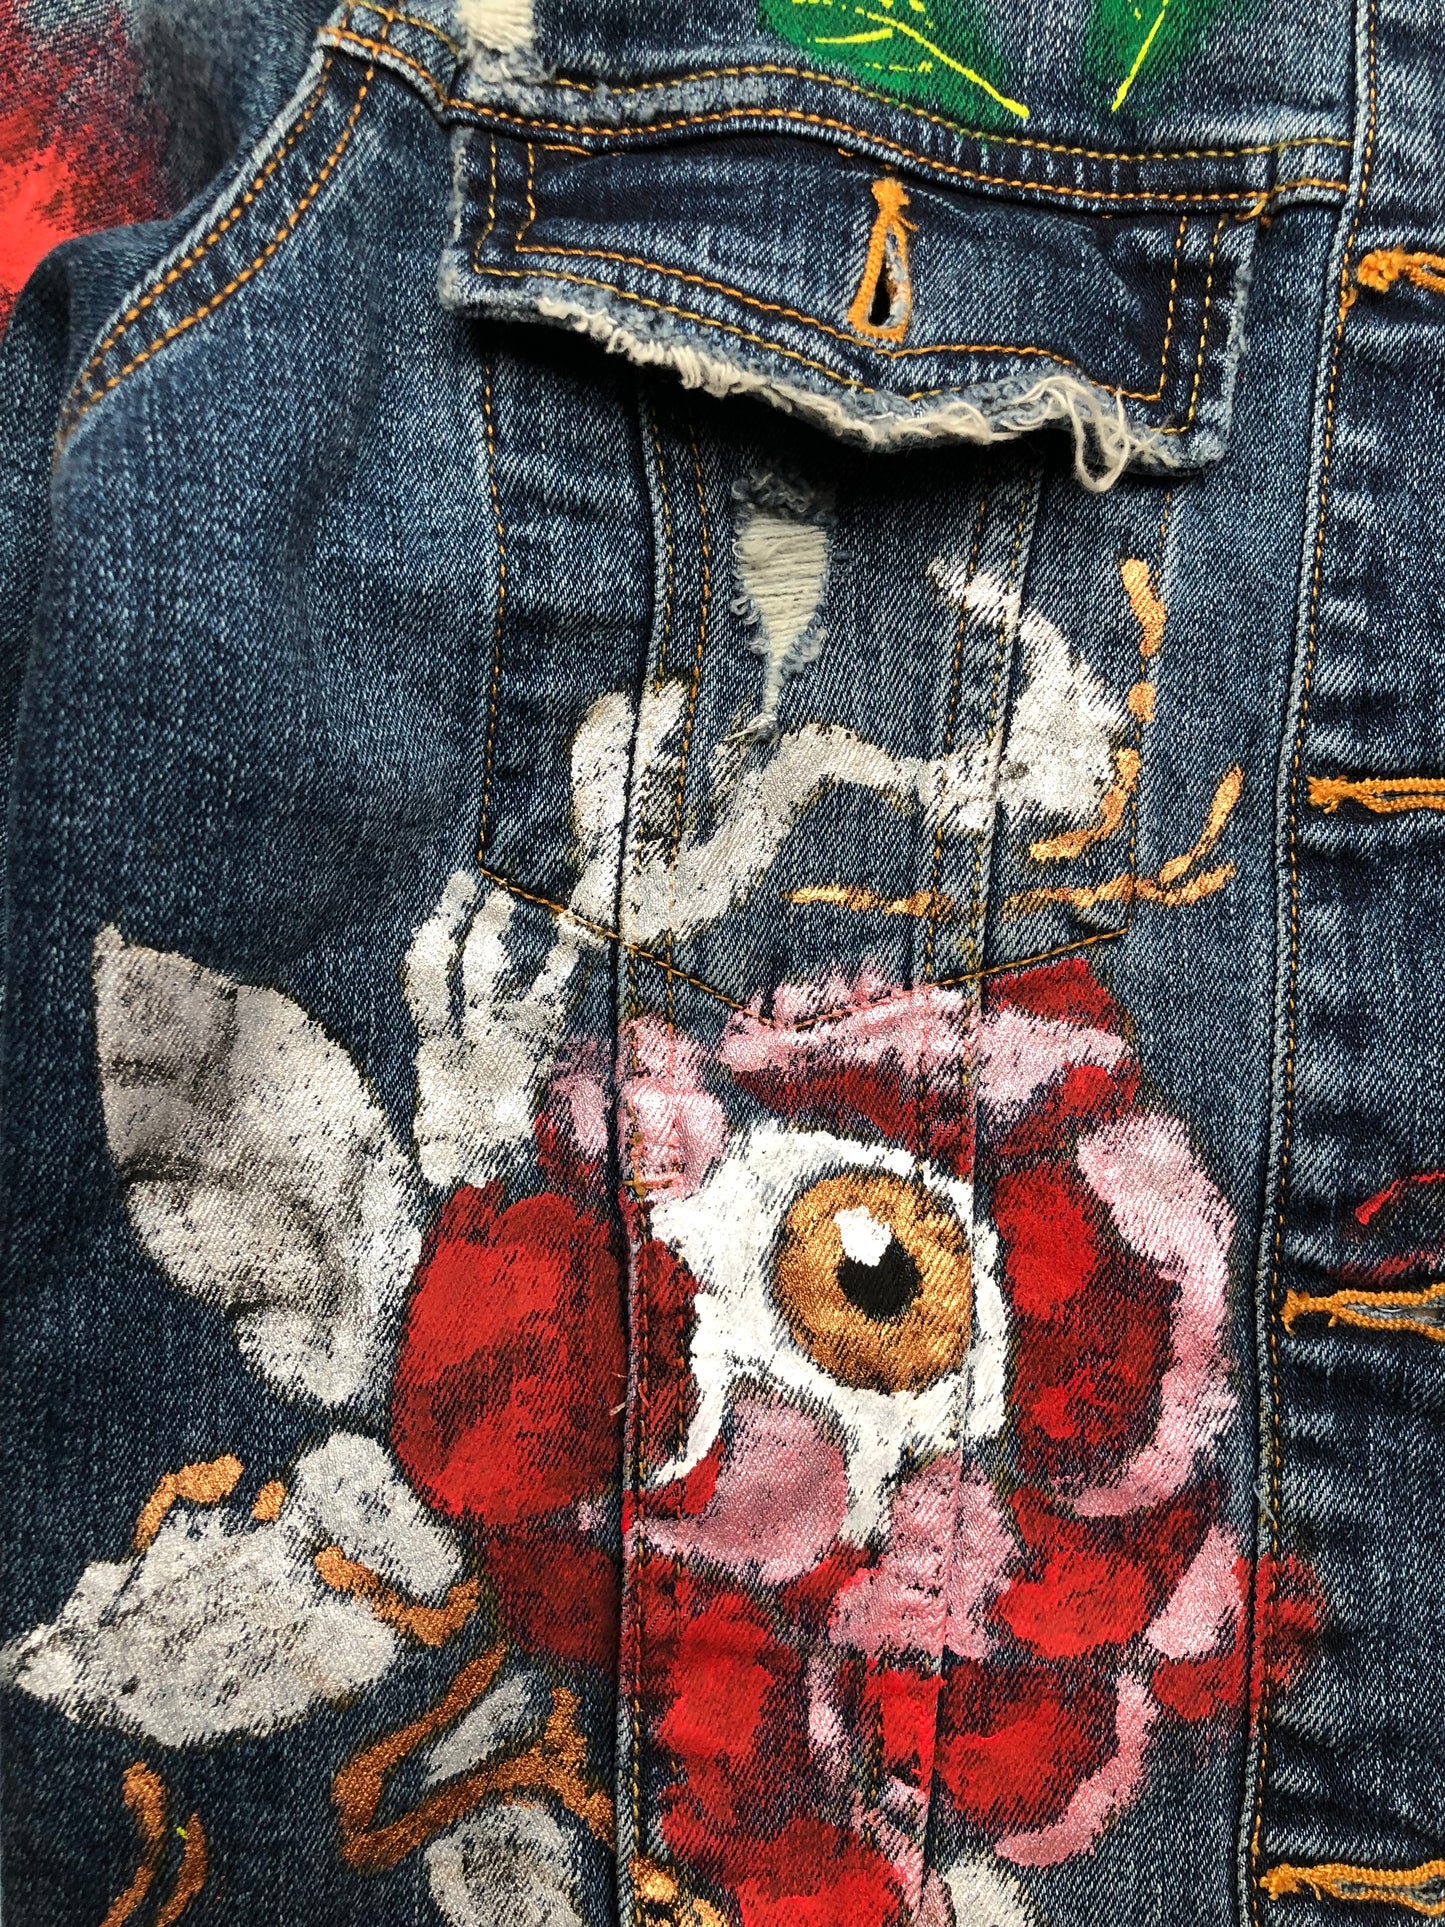 Very detailed flower-eye painting on a women's denim jacket